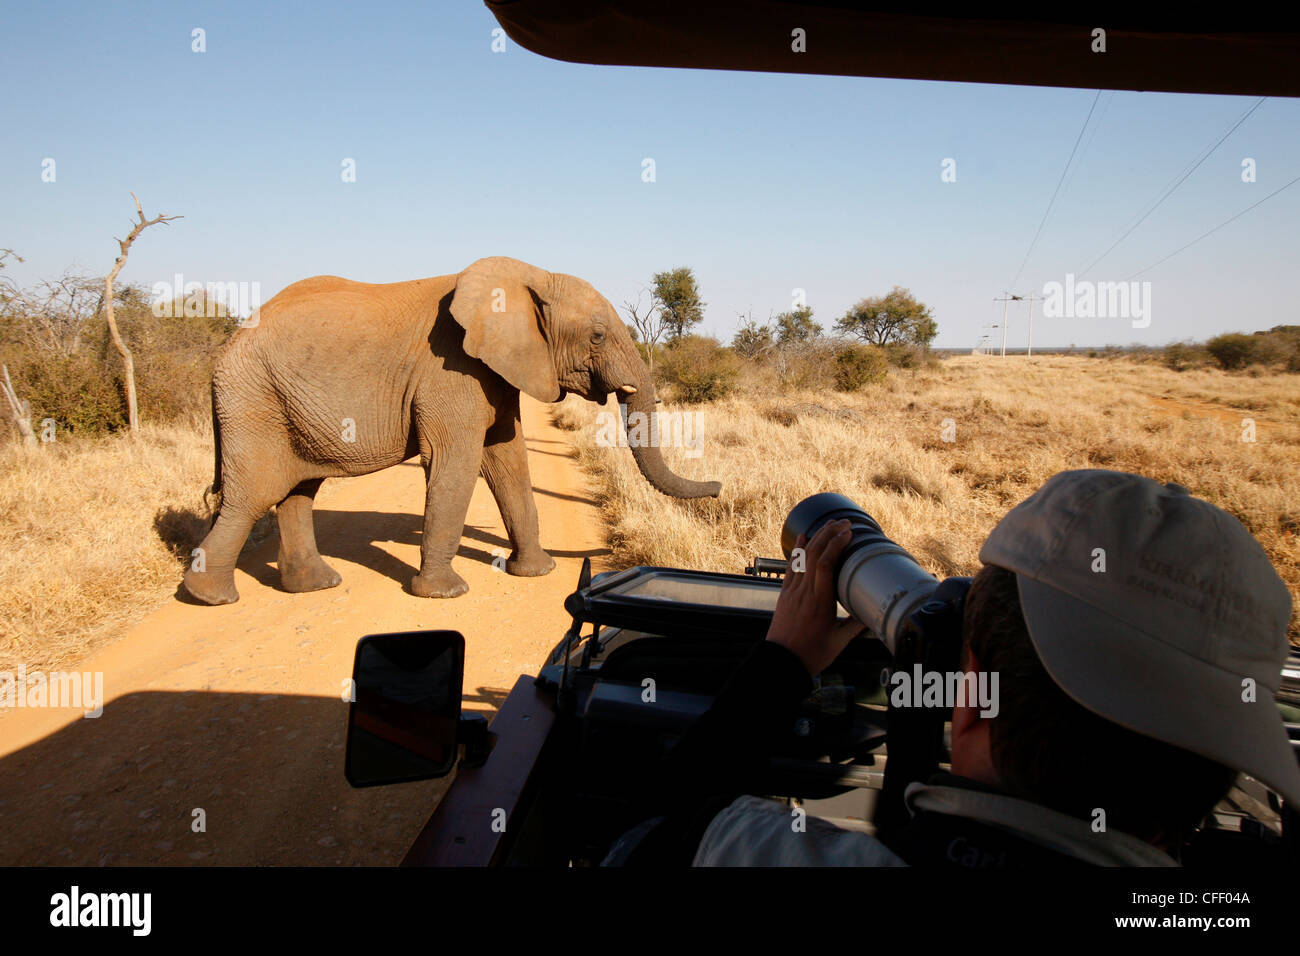 Afrikanischer Elefant vor Safari Fahrzeug, Madikwe Wildreservat Madikwe, Südafrika, Afrika Stockfoto